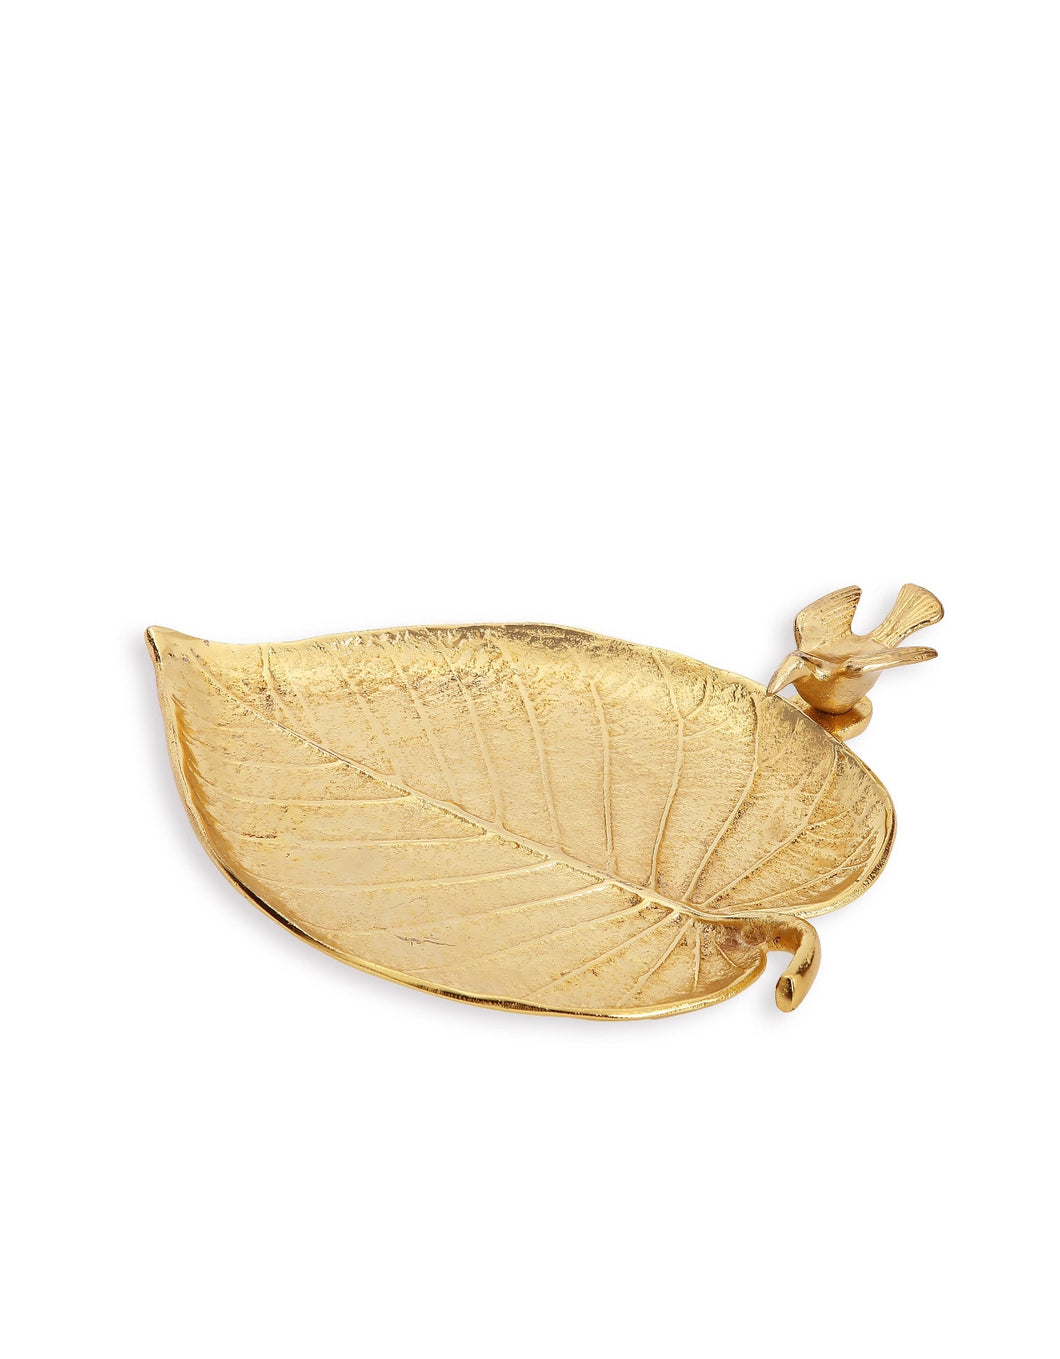 9”L Gold Leaf Tray With Bird design